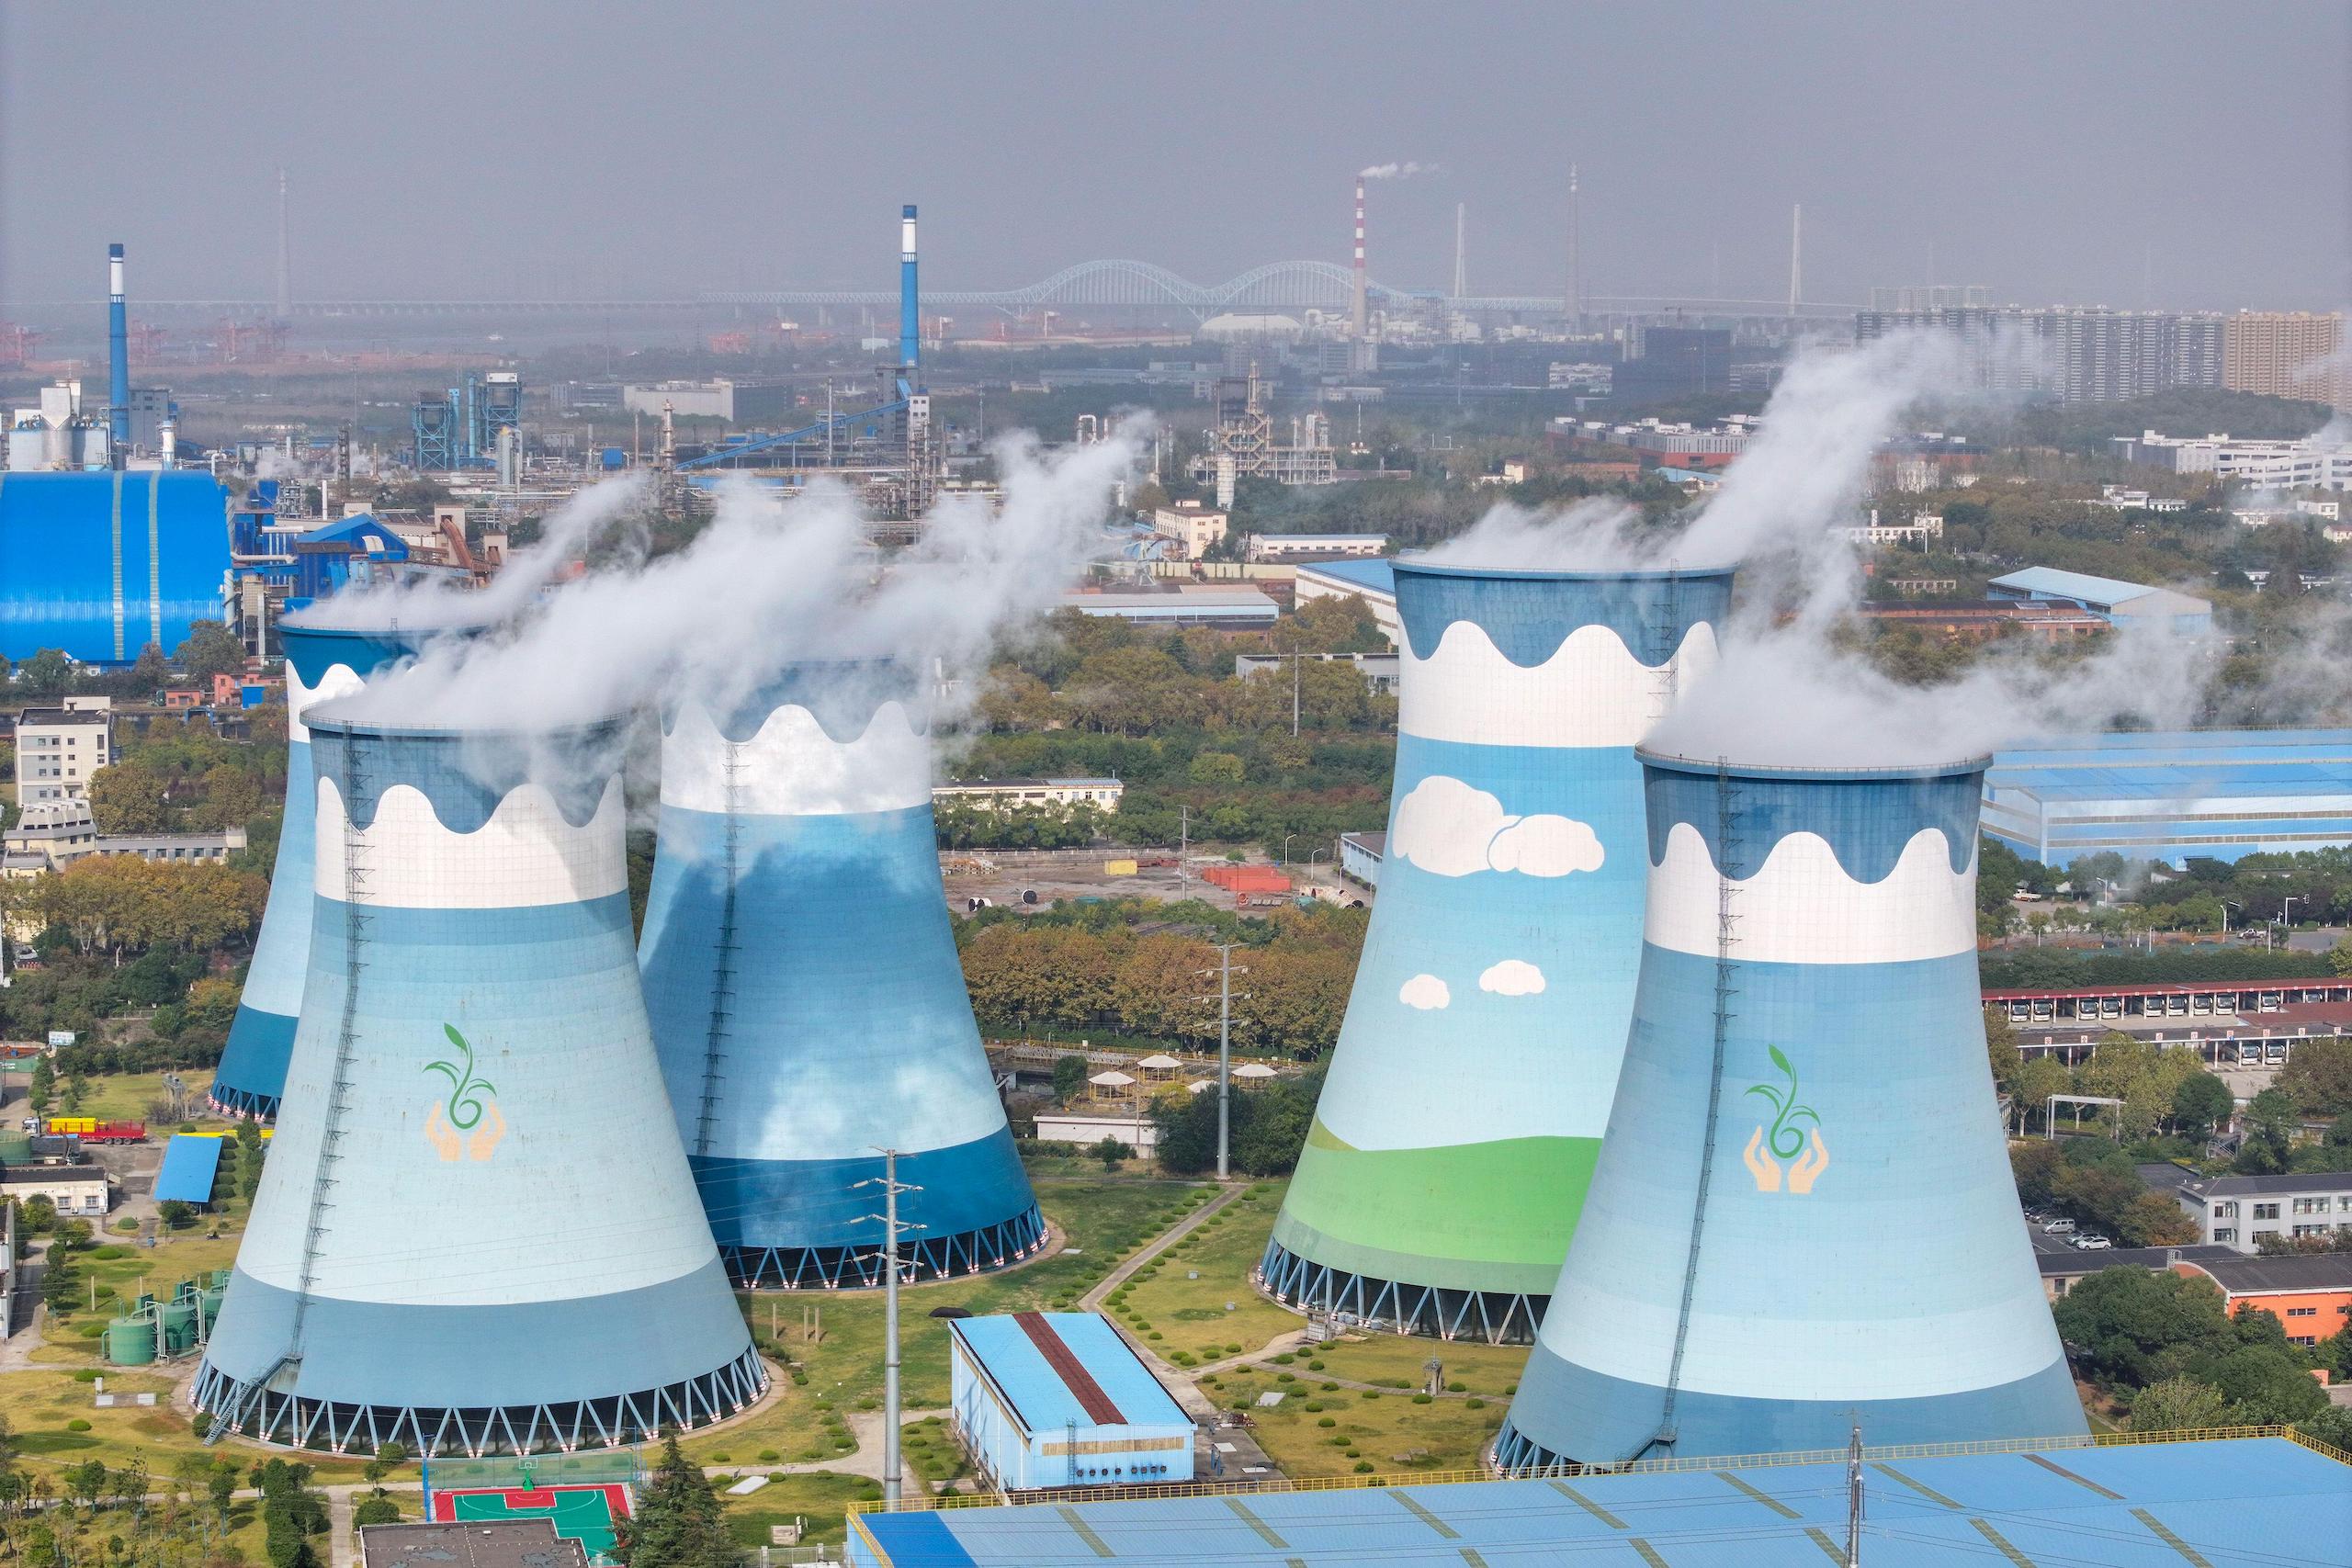 <p>江苏省南京市，一座为眉山钢铁厂供电的燃煤电站。图片来源：Alamy</p>